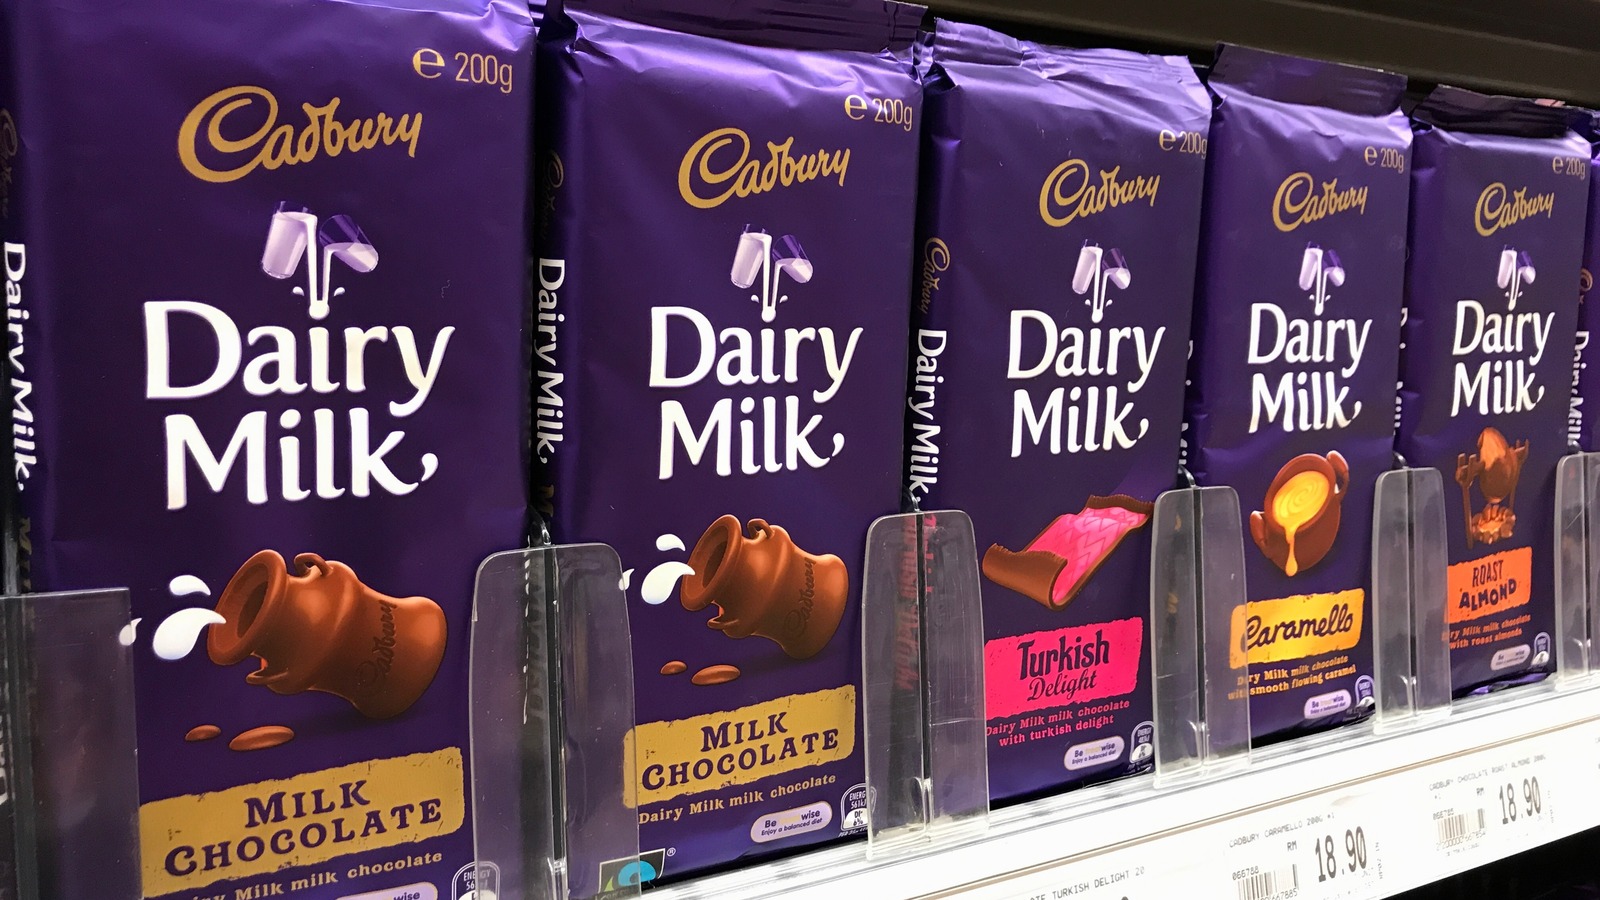 The Cadbury Chocolate Machine - can you still buy them?